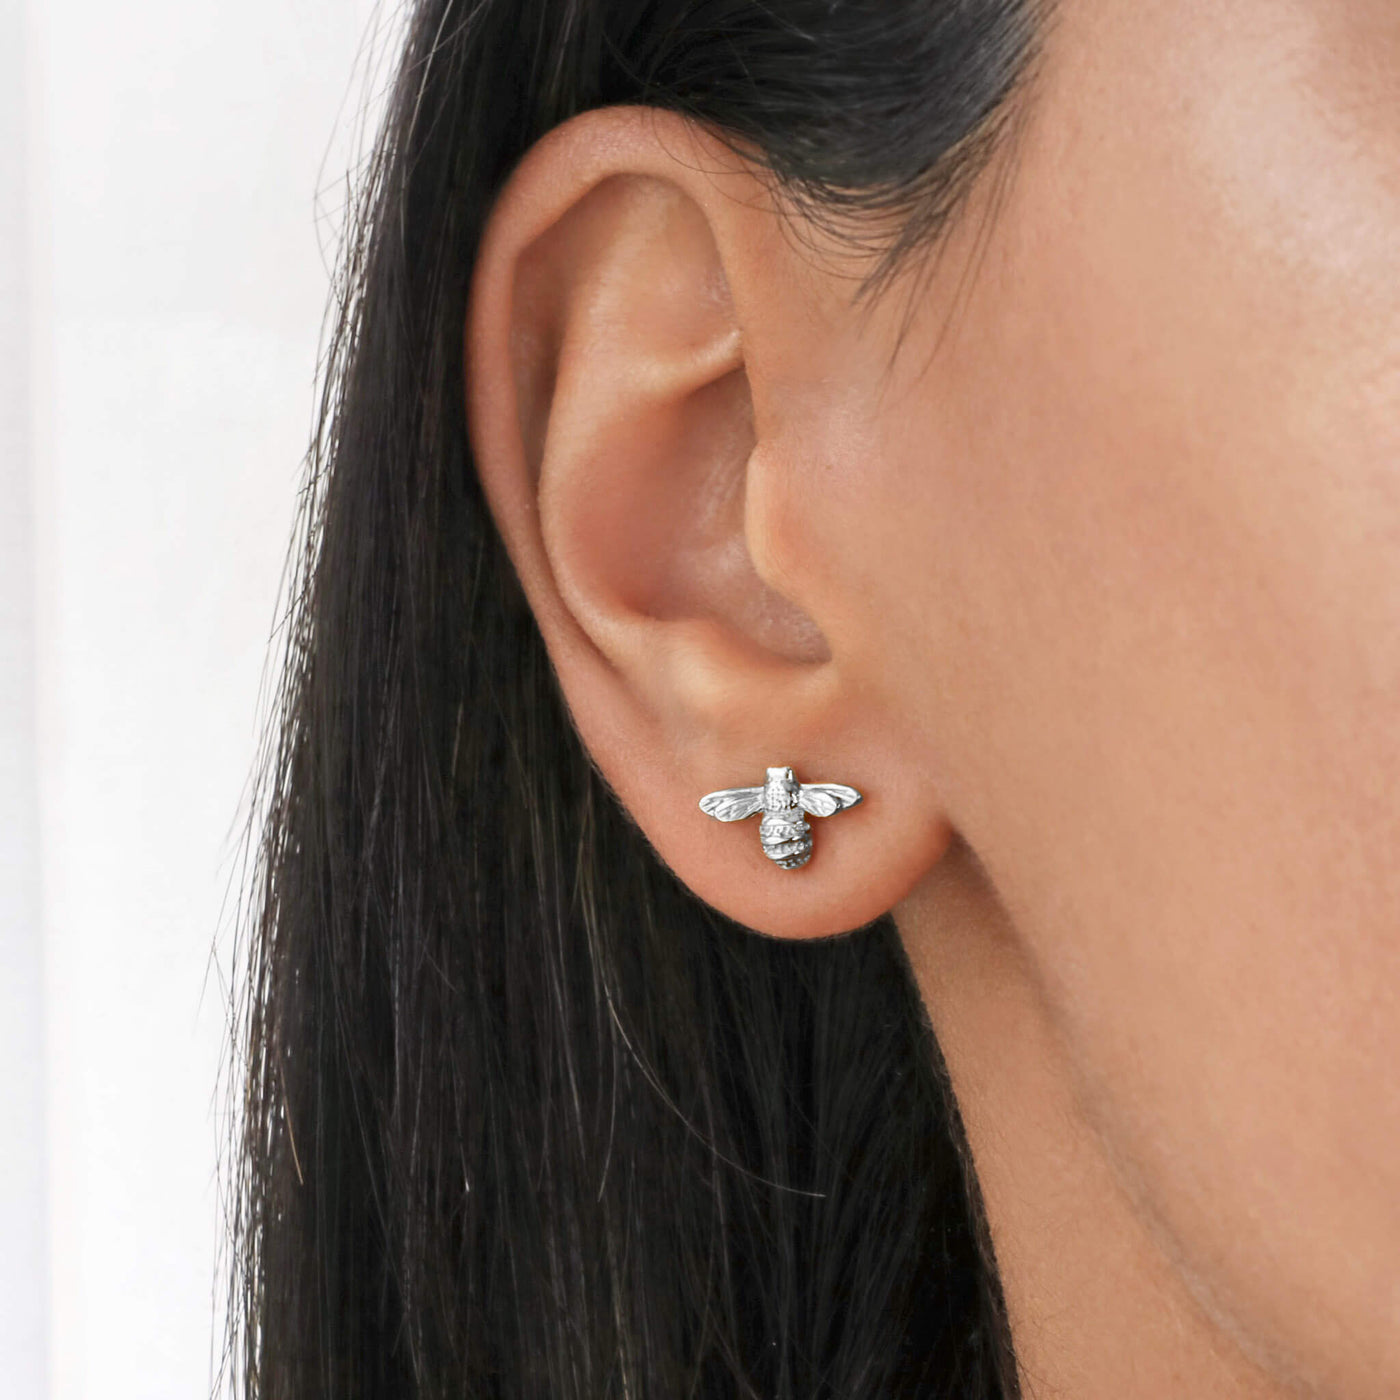 Silver bumble bee stud earrings, Rani & Co. jewellery